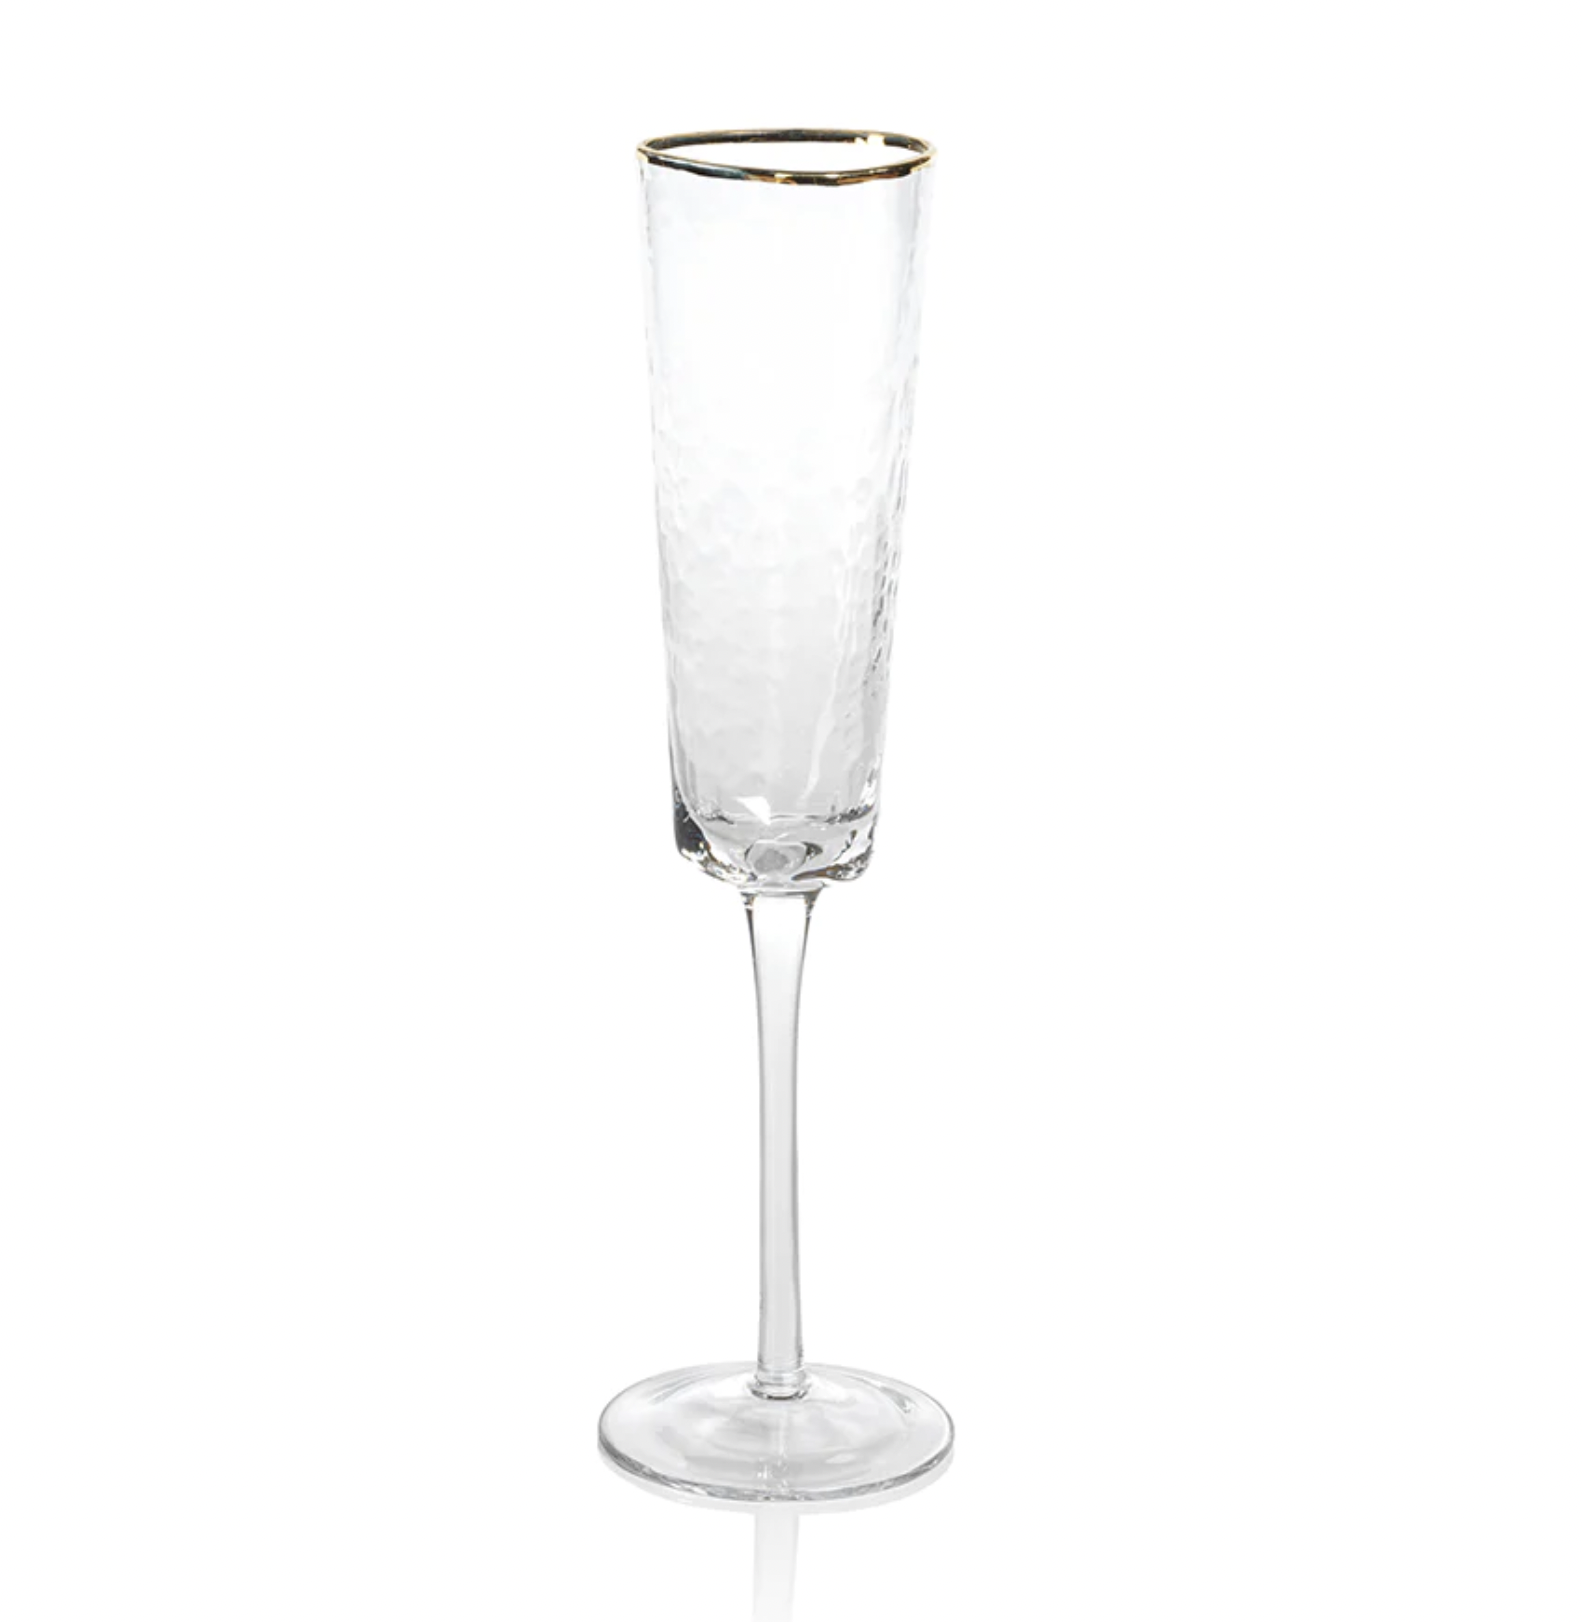 ZODAX Aperitivo Triangular Champagne Flute - Clear with Gold Rim